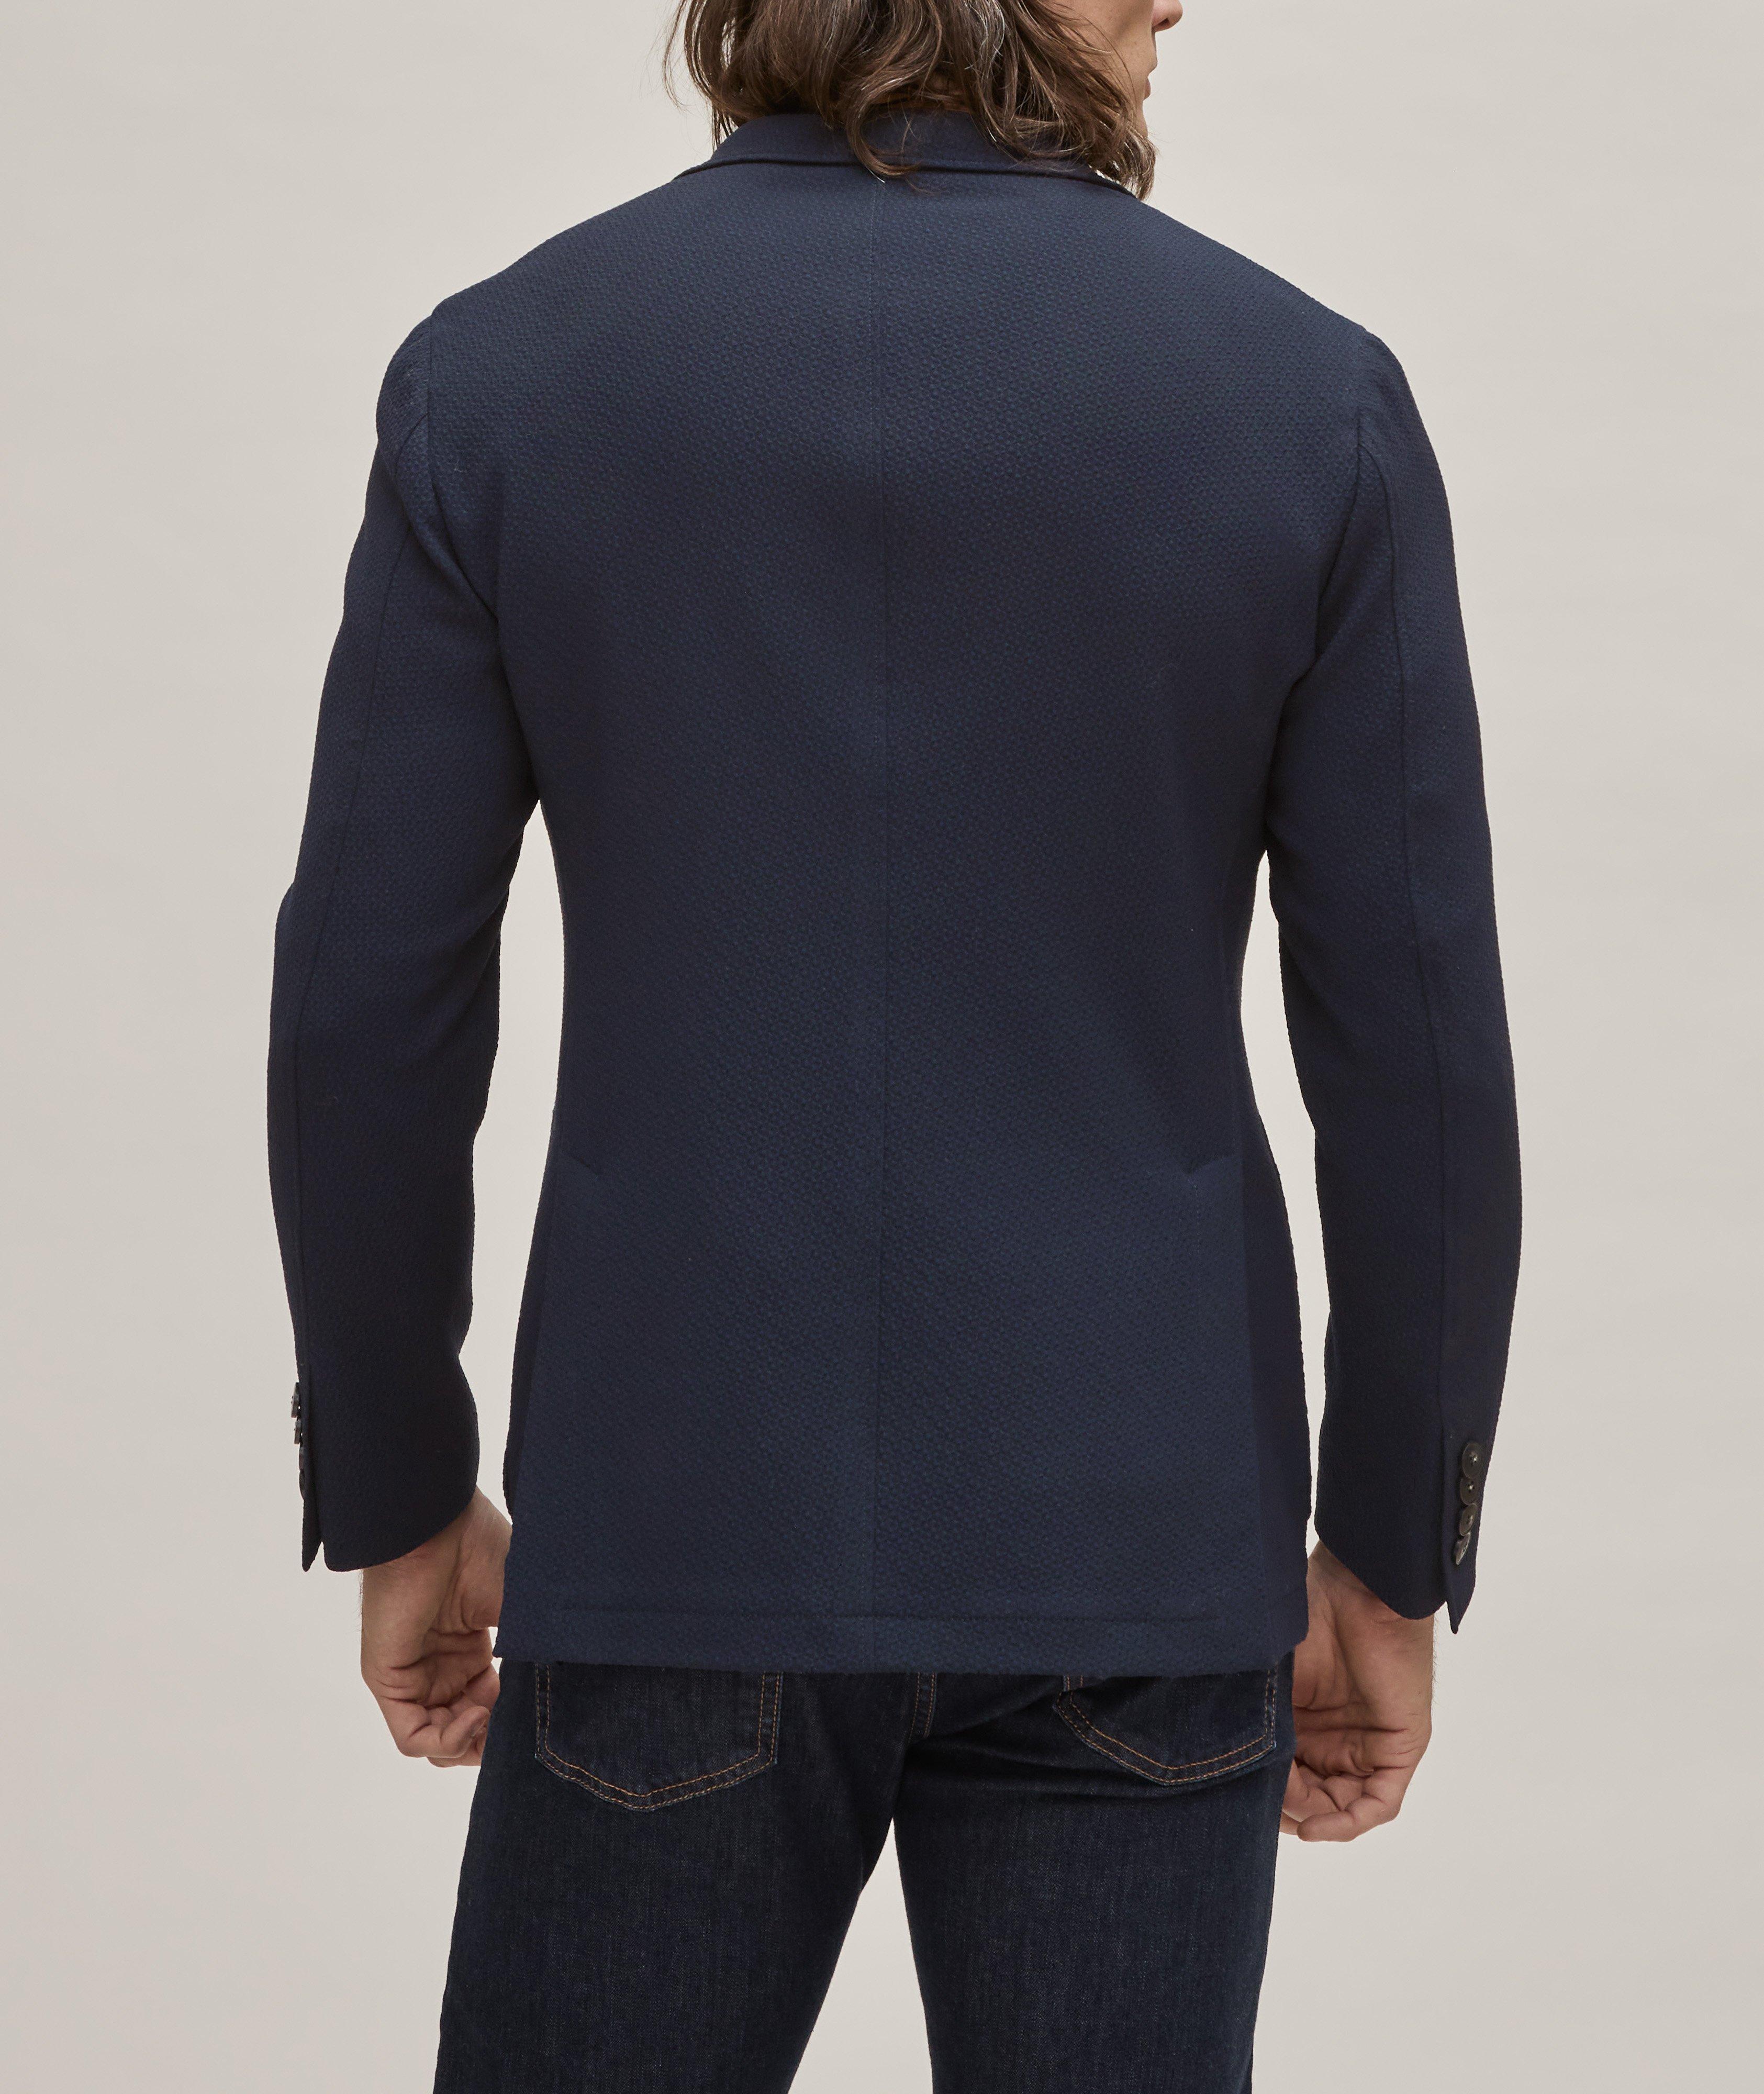 Nuvola Seersucker Stretch Wool-Cotton Sport Jacket image 2